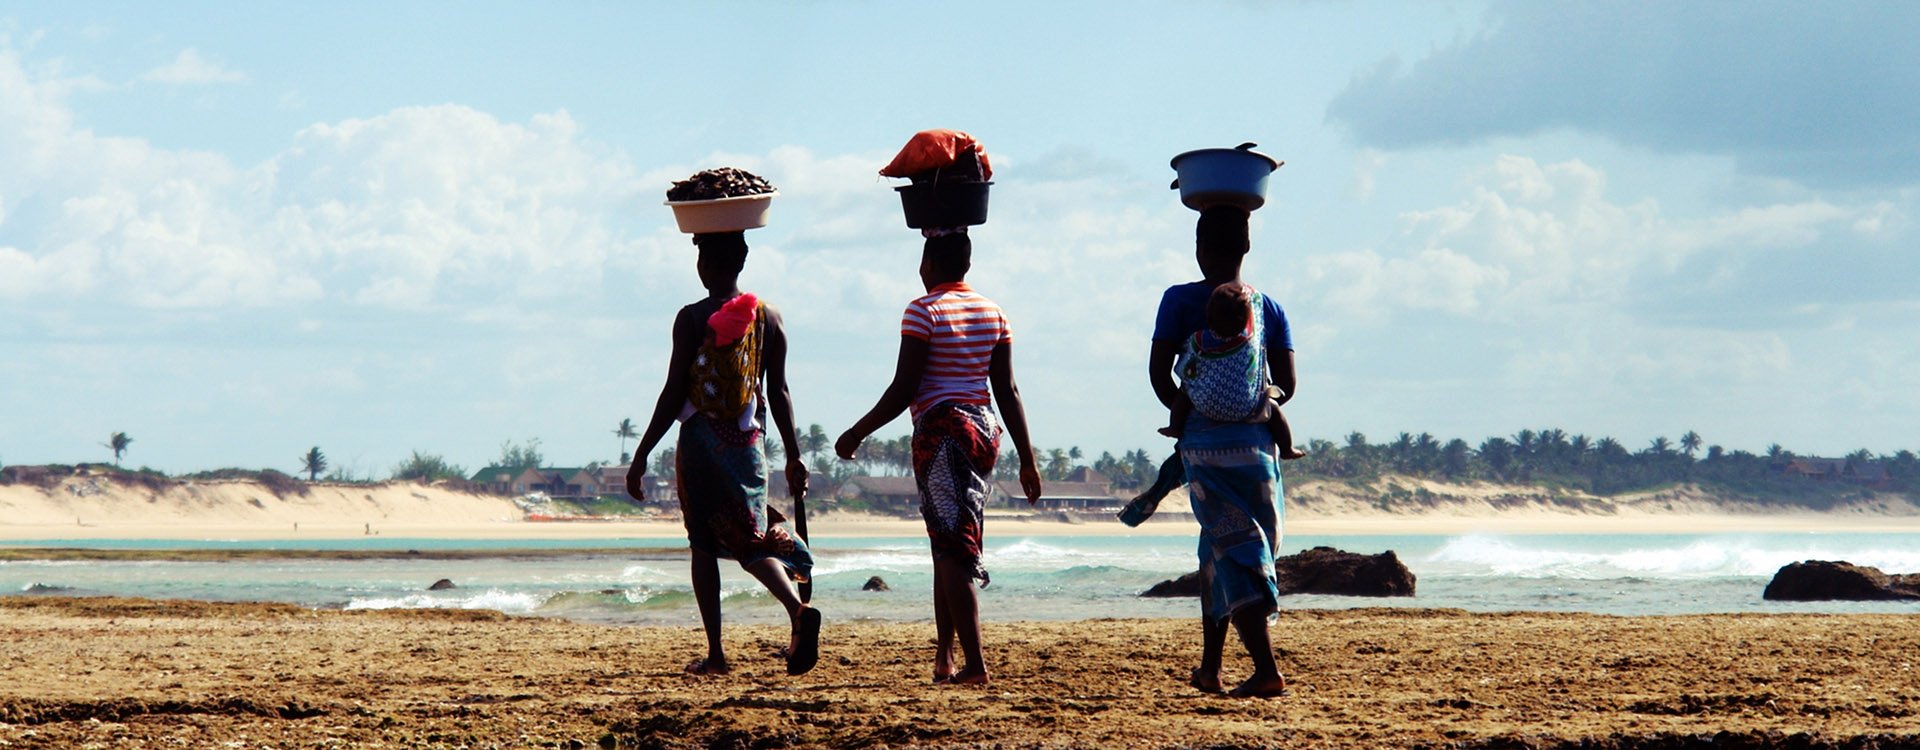 Mozambique women carrying basket  at Tofo beach, Mozambique